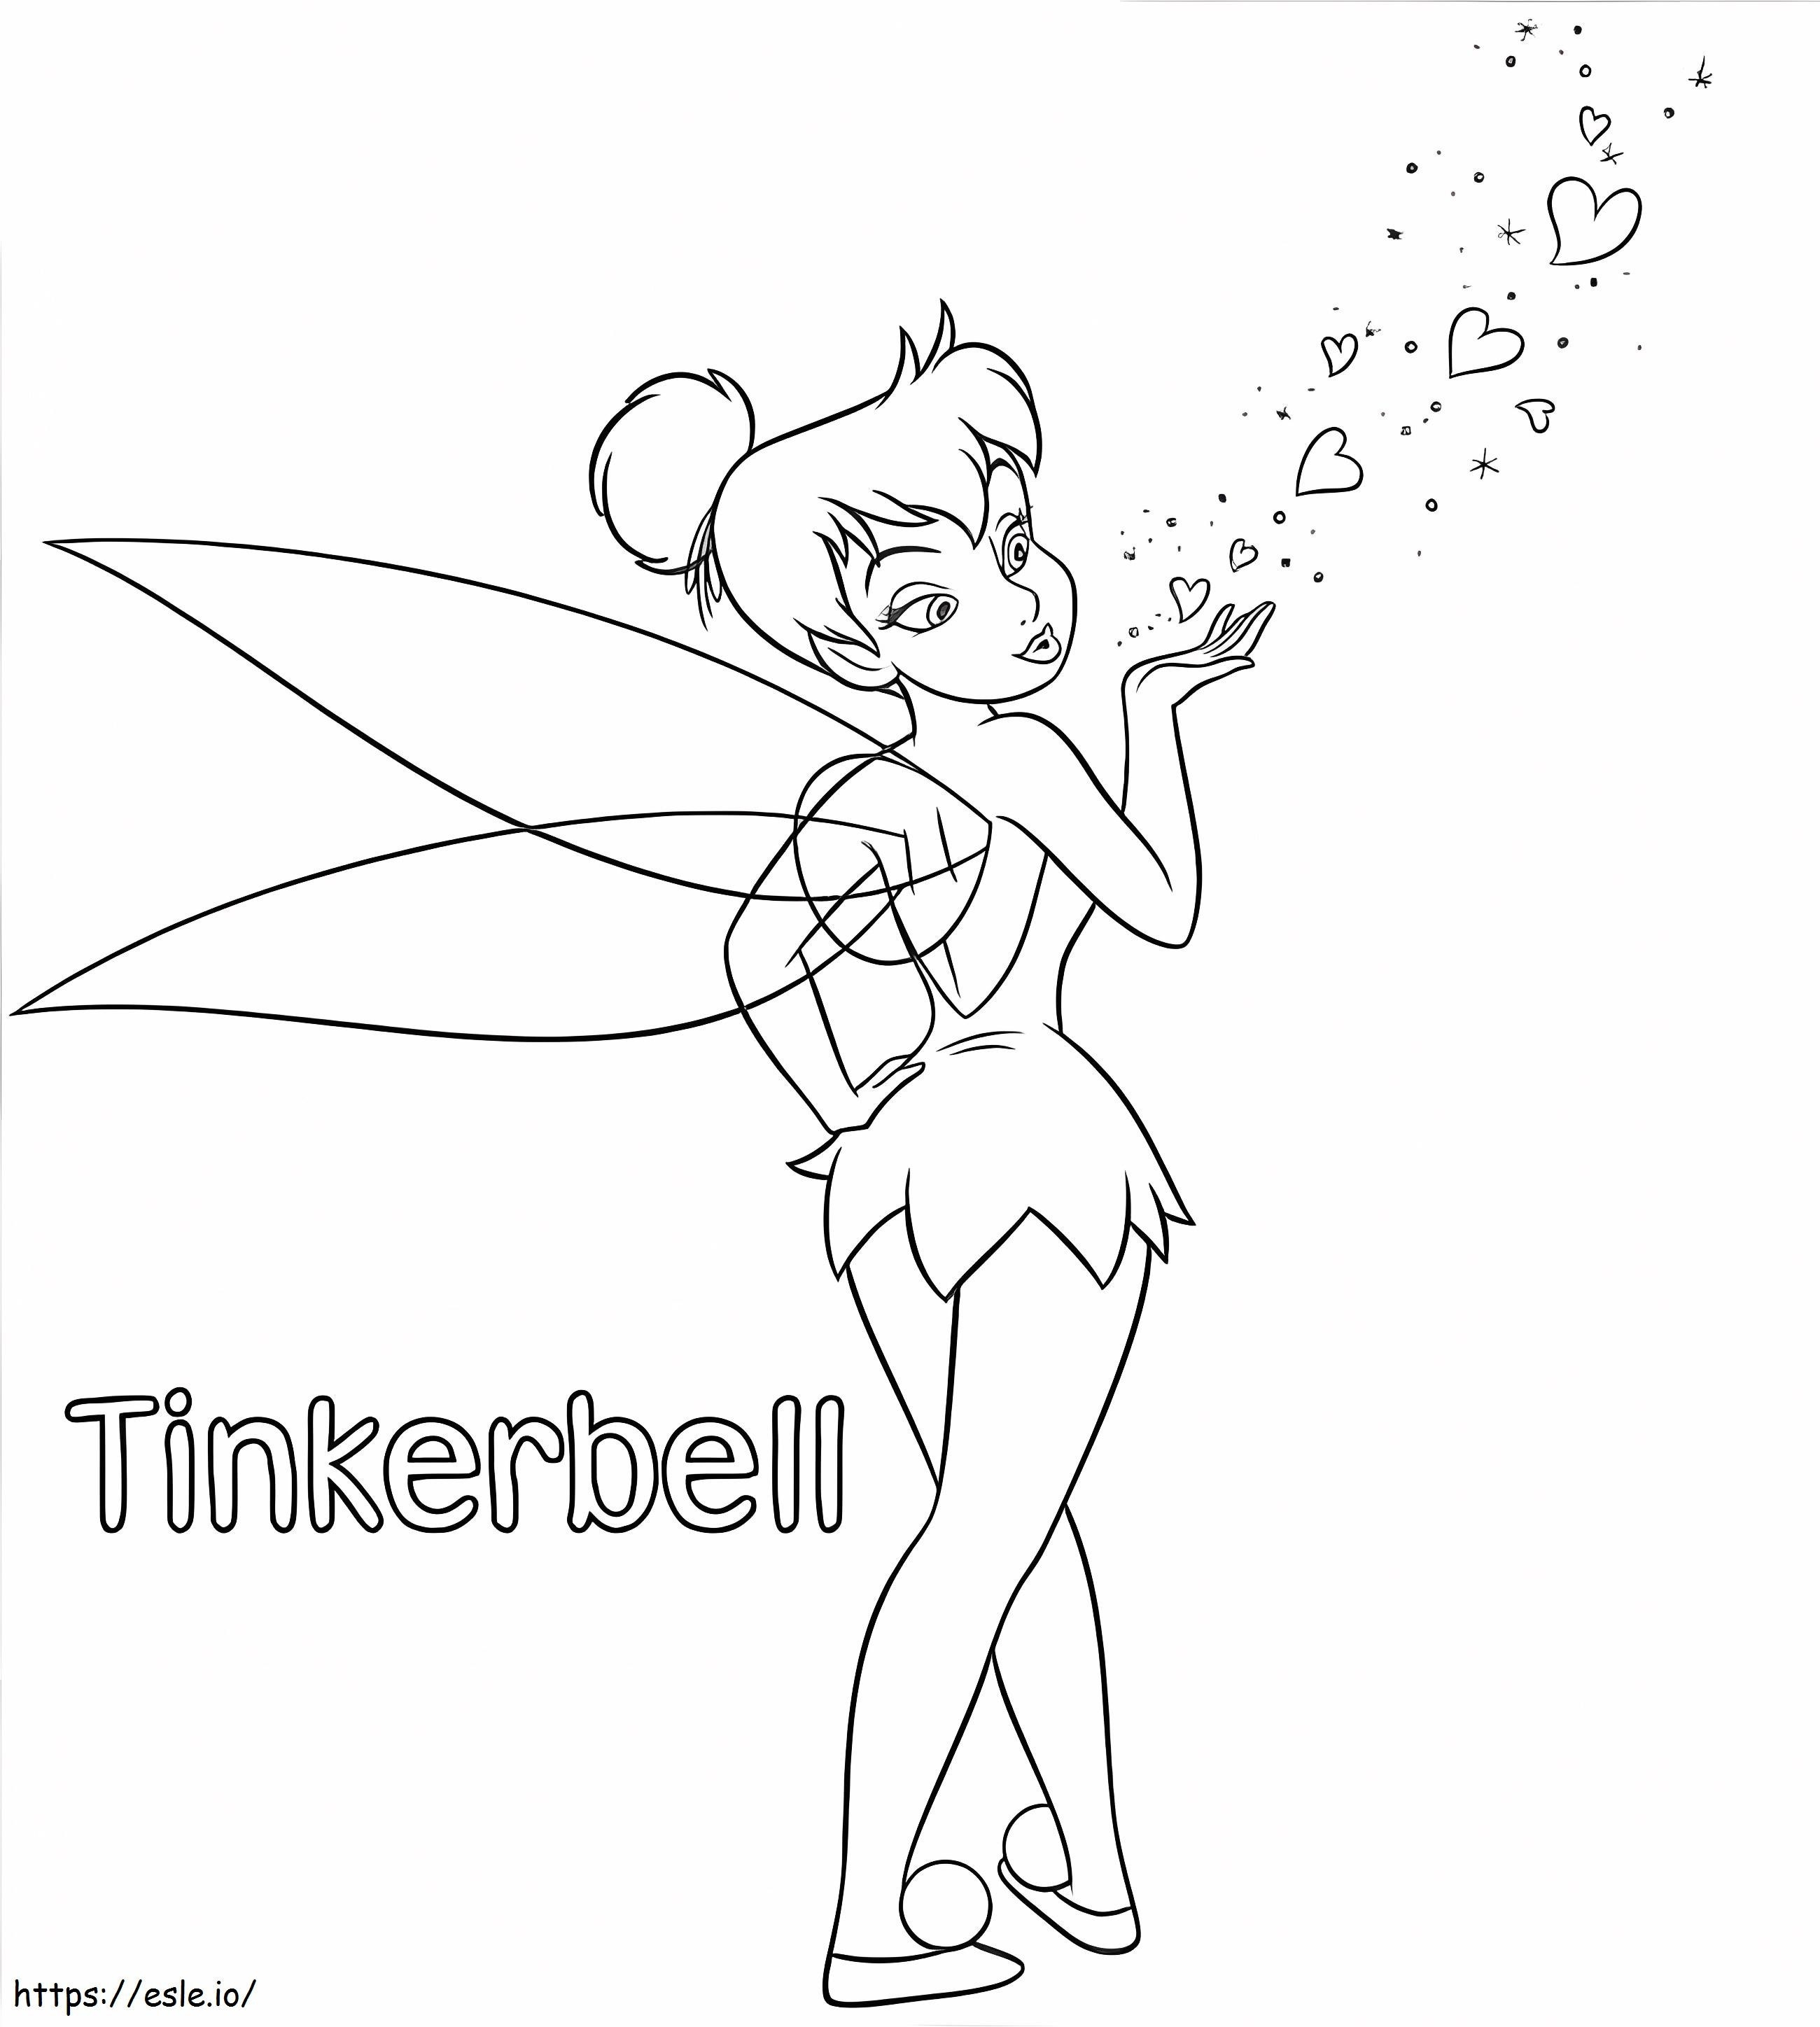 İyi Tinkerbell boyama